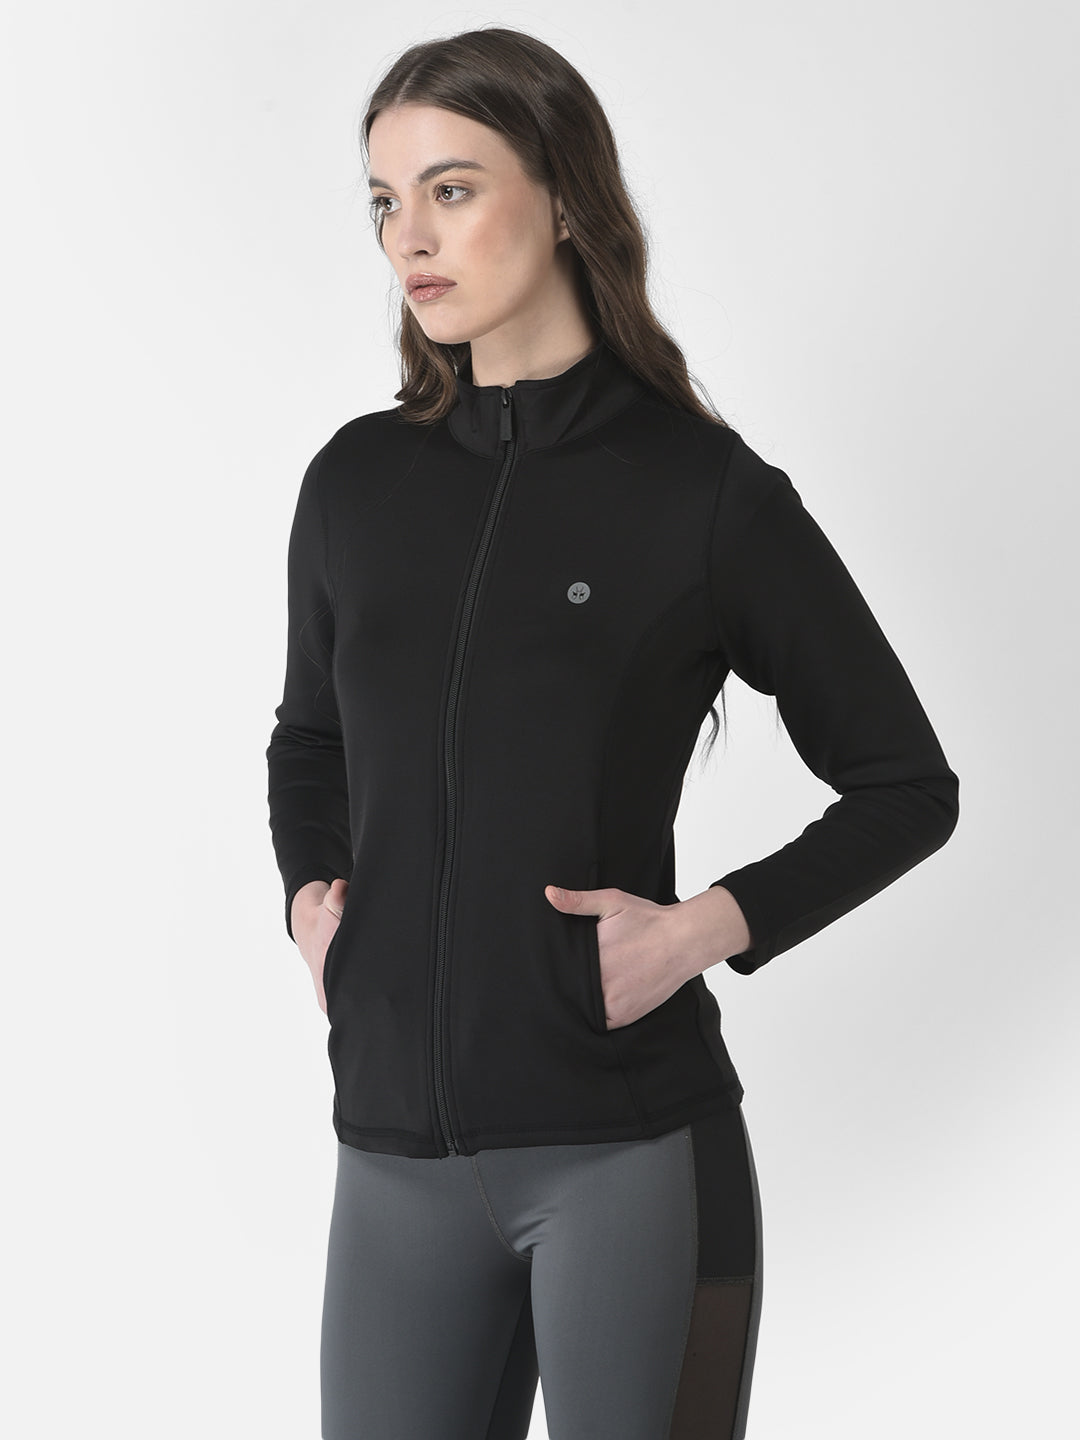  Black Zip-Enclosed Sweatshirt